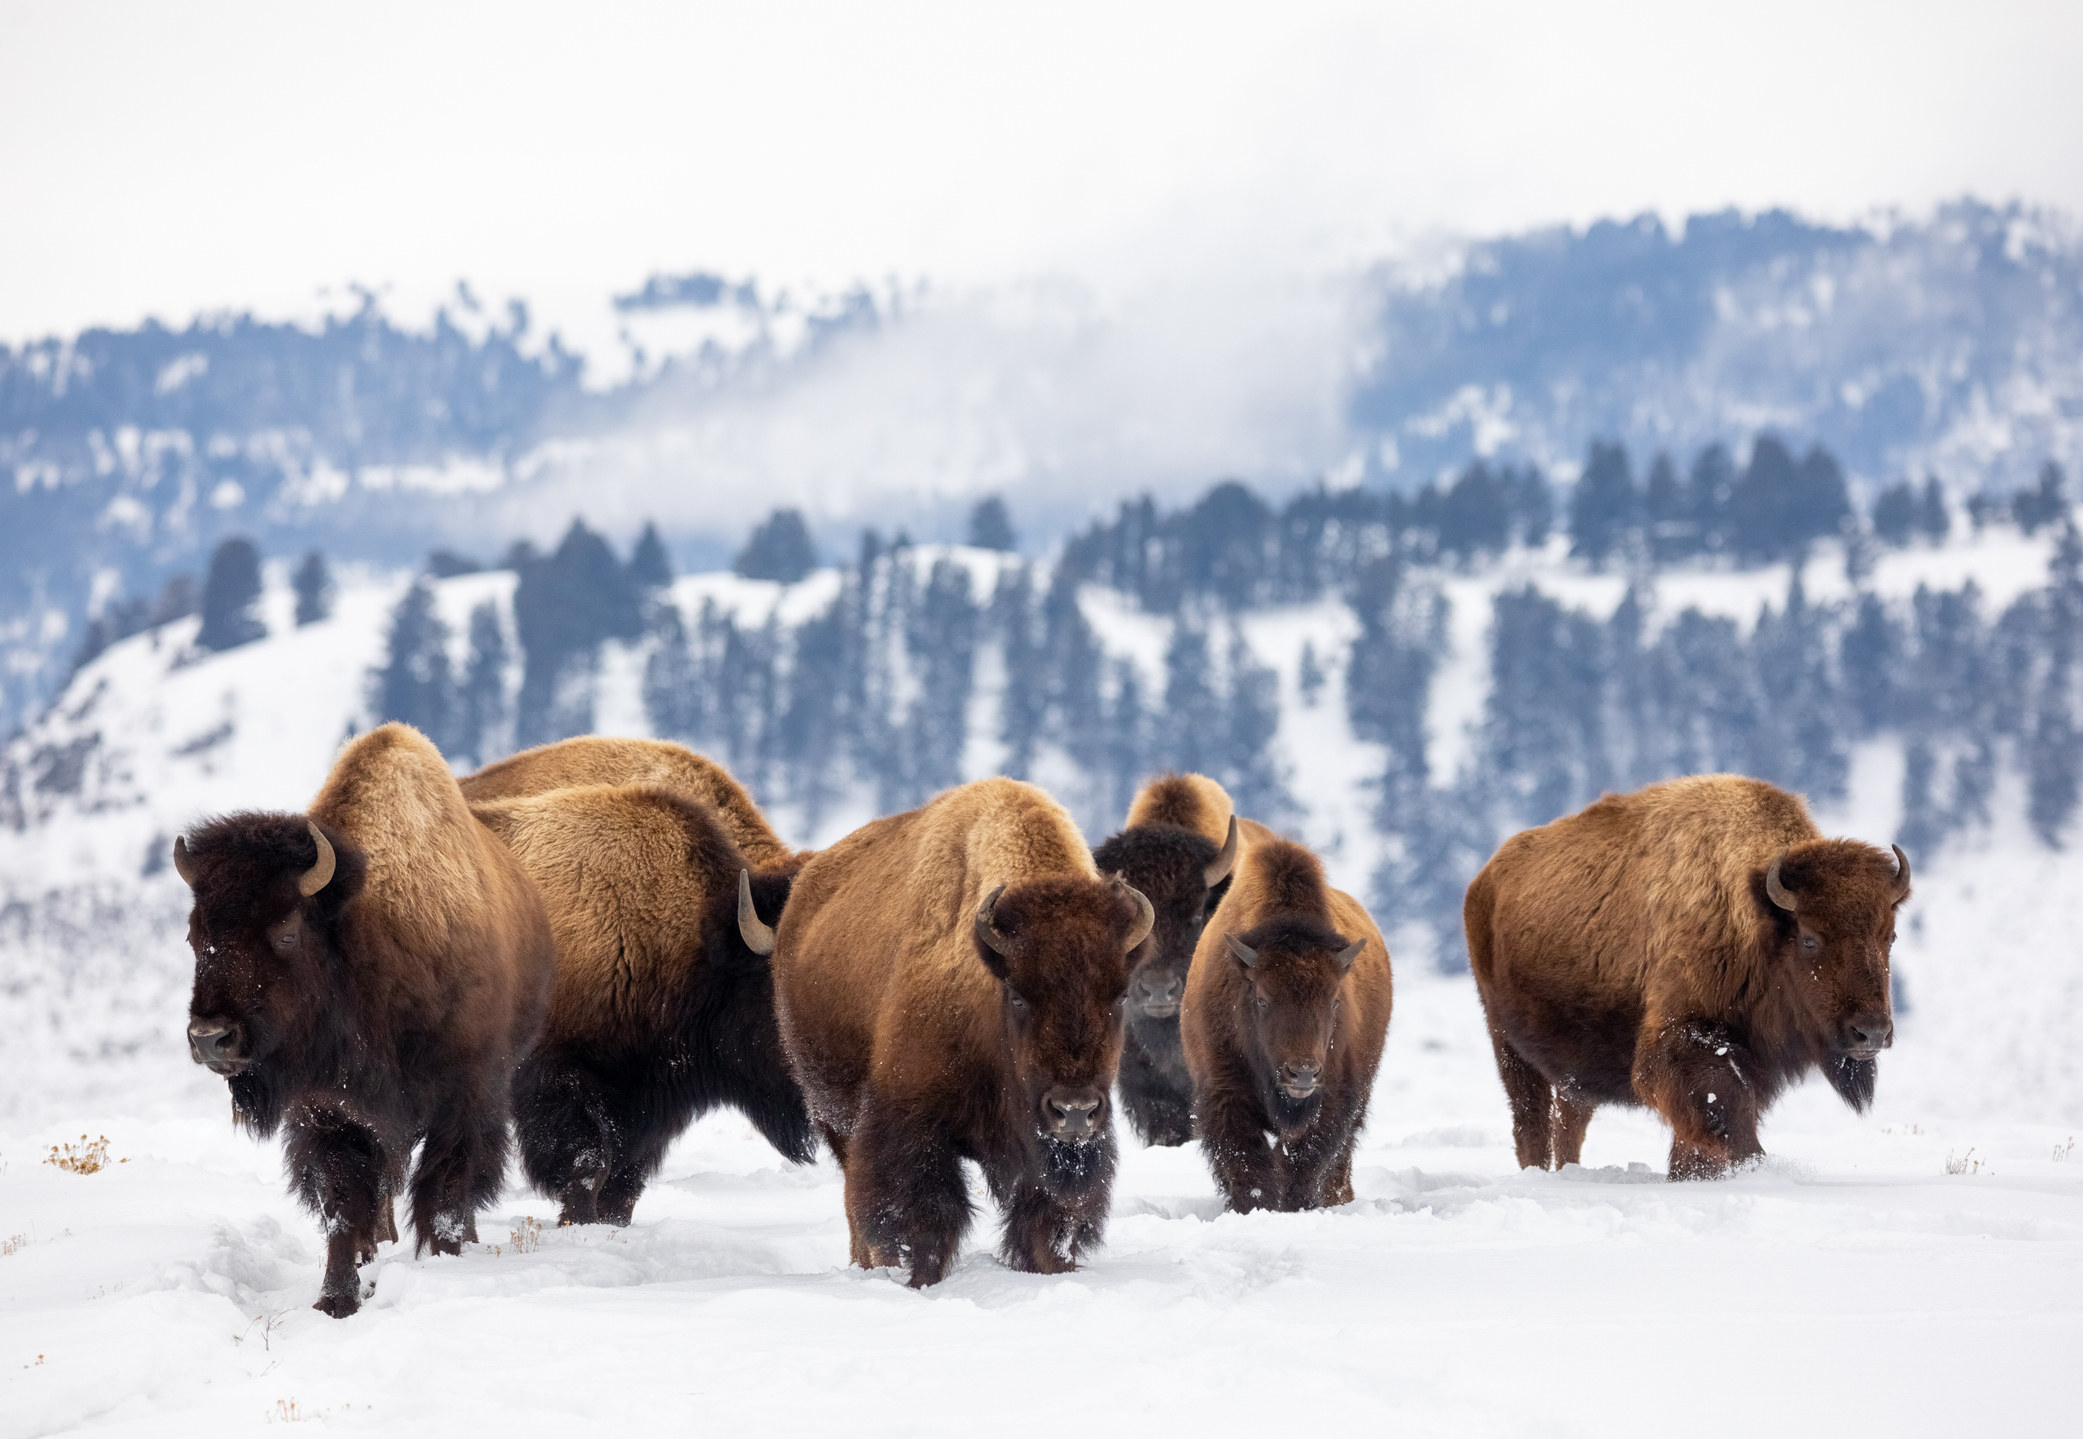 A herd of bison walking in snow